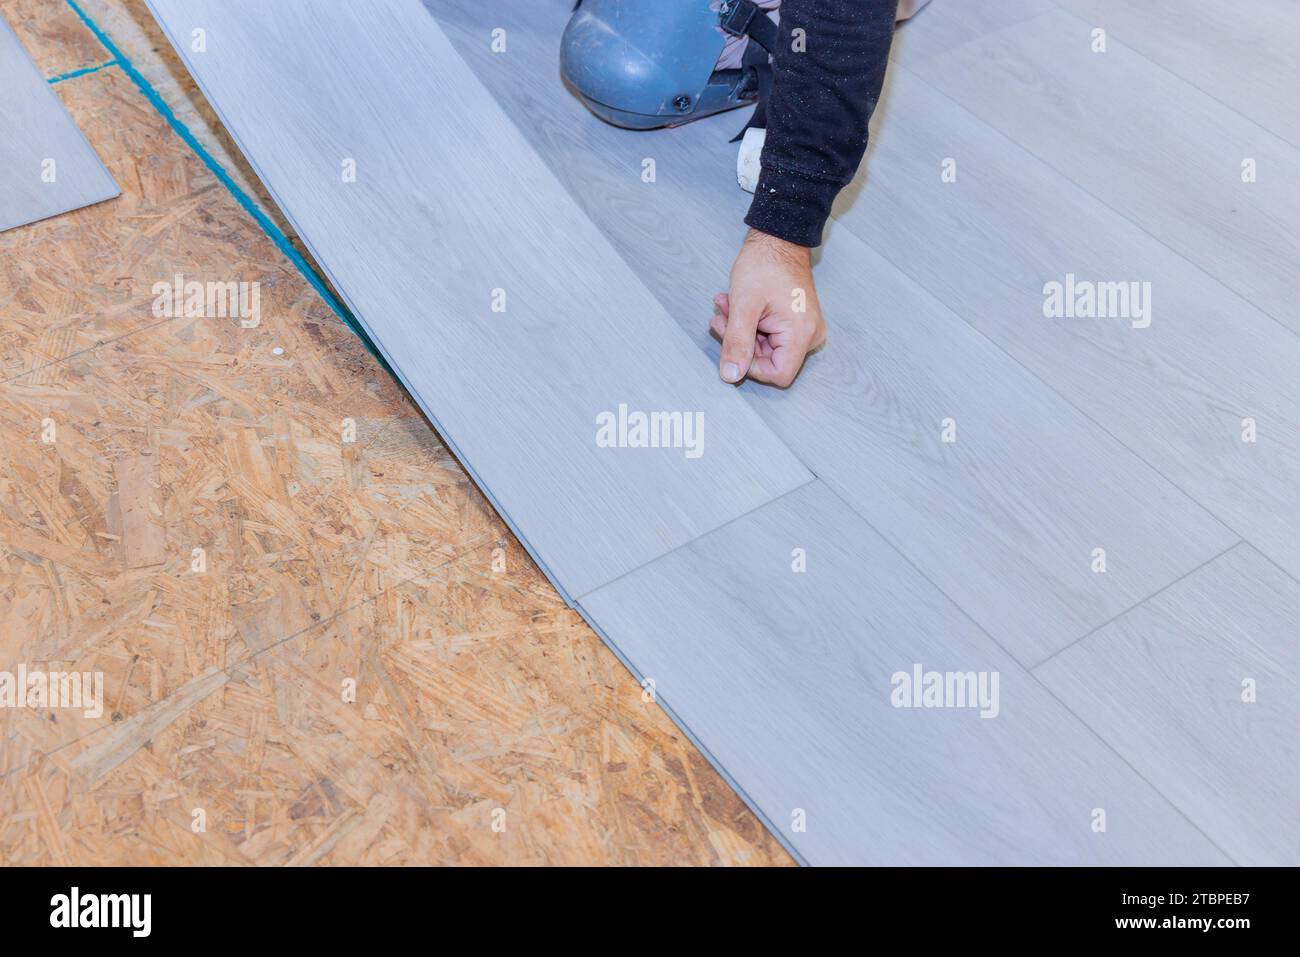 Worker installs vinyl laminate flooring in new residence Stock Photo